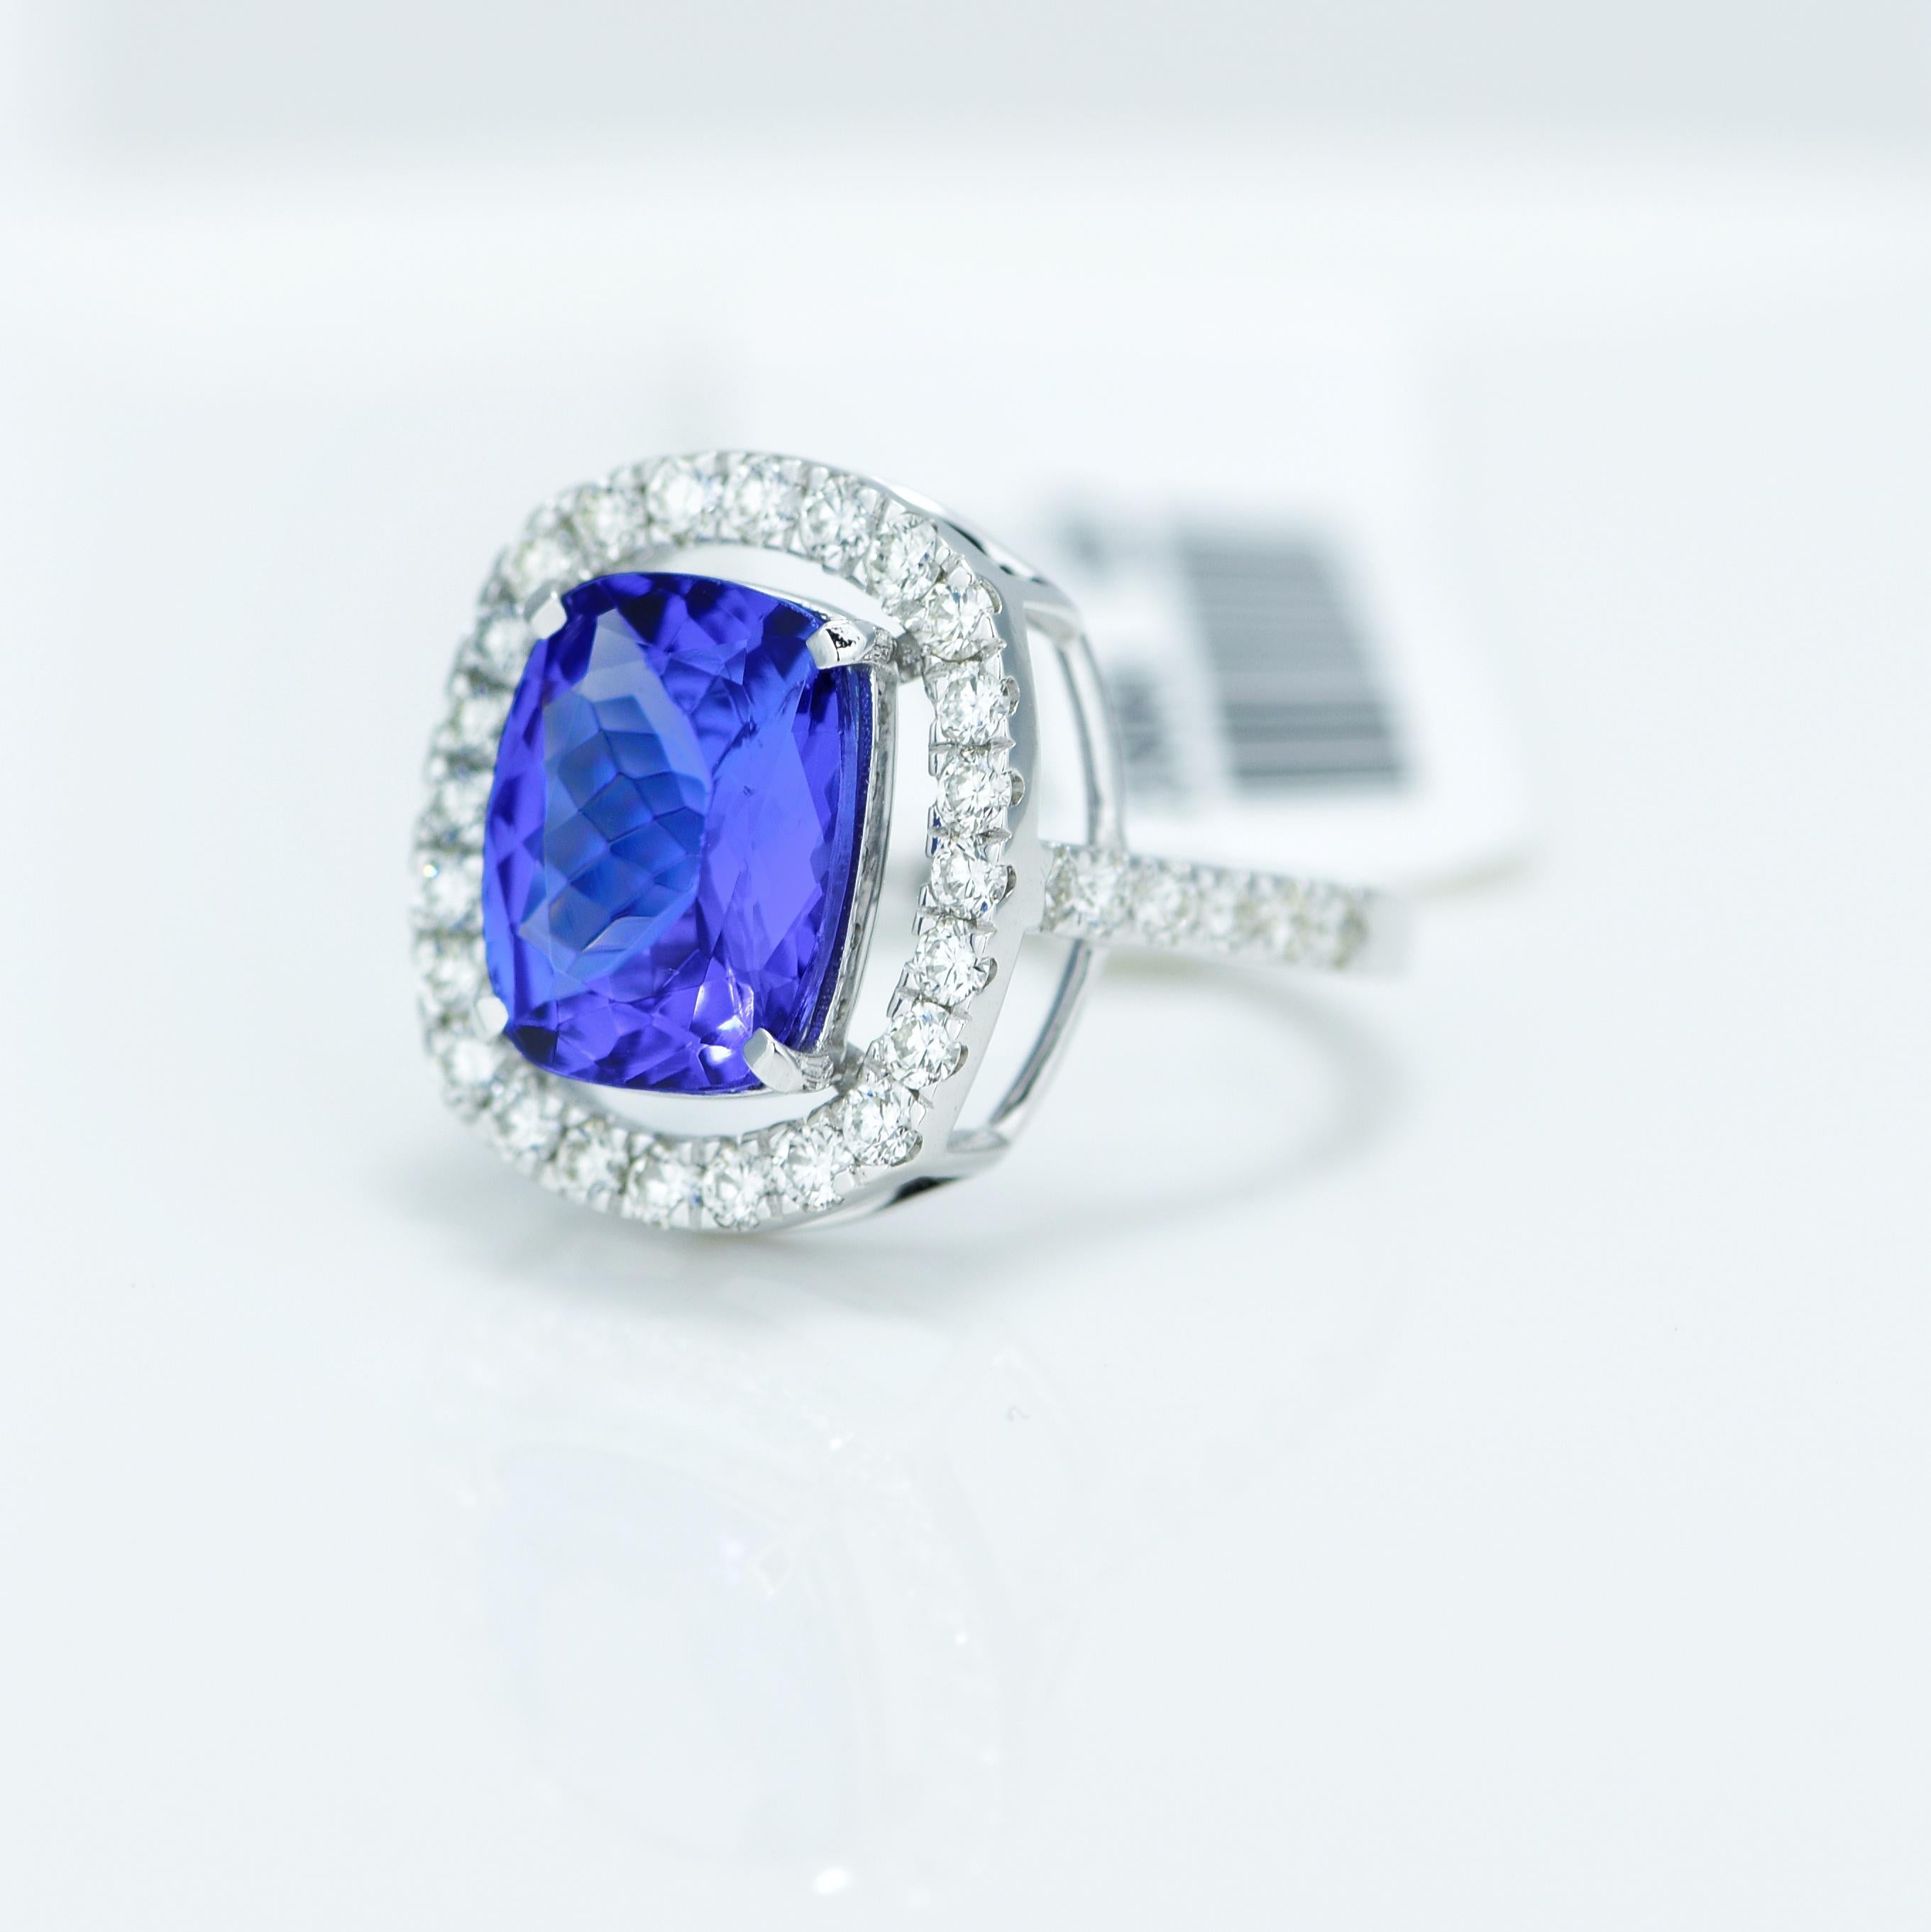 Stunning Violetish Blue Tanzanite and Diamond halo ring.

Centre Stone - Natural Tanzanite, 
Centre Stone Weight - 2.80 Carat, 
Centre Stone Shape & Cut - Cushion Step Cut
 
Total Number of Diamonds - 34, 
Diamonds Carat Weight - 0.58 carat
Diamond